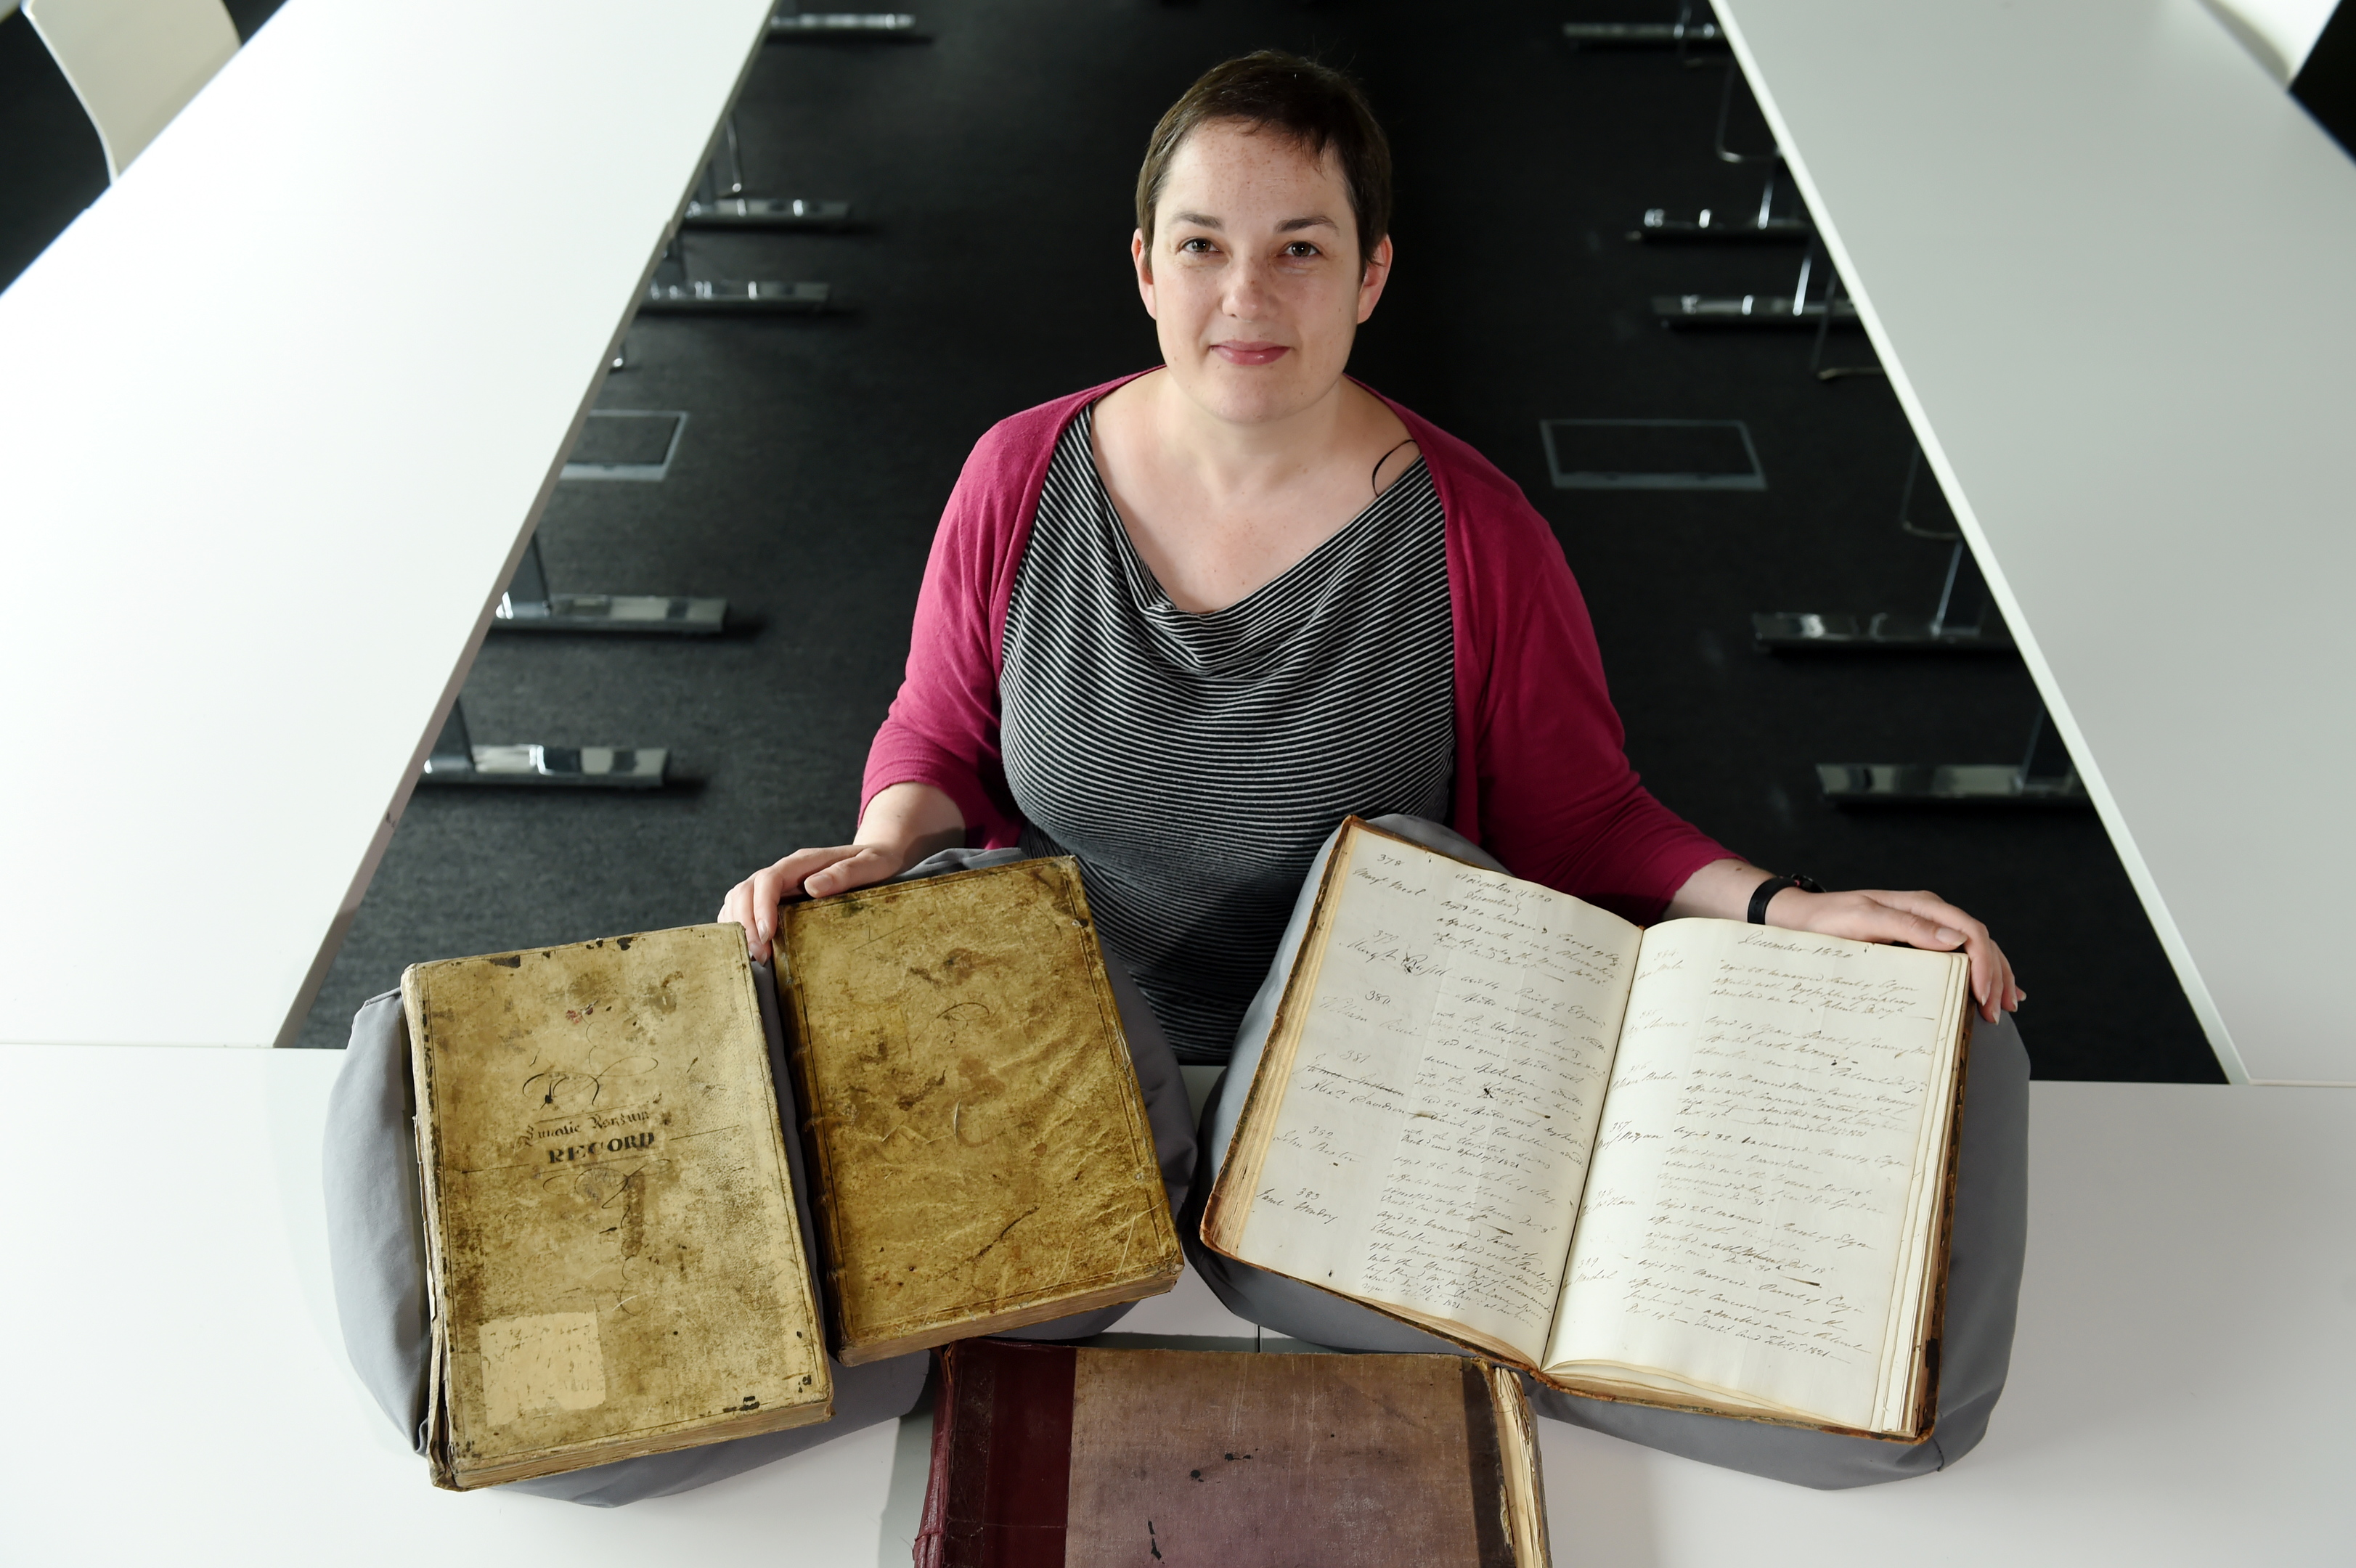 NHS Grampian archivist Fiona Musk has examined how hospitals ran during WW1.